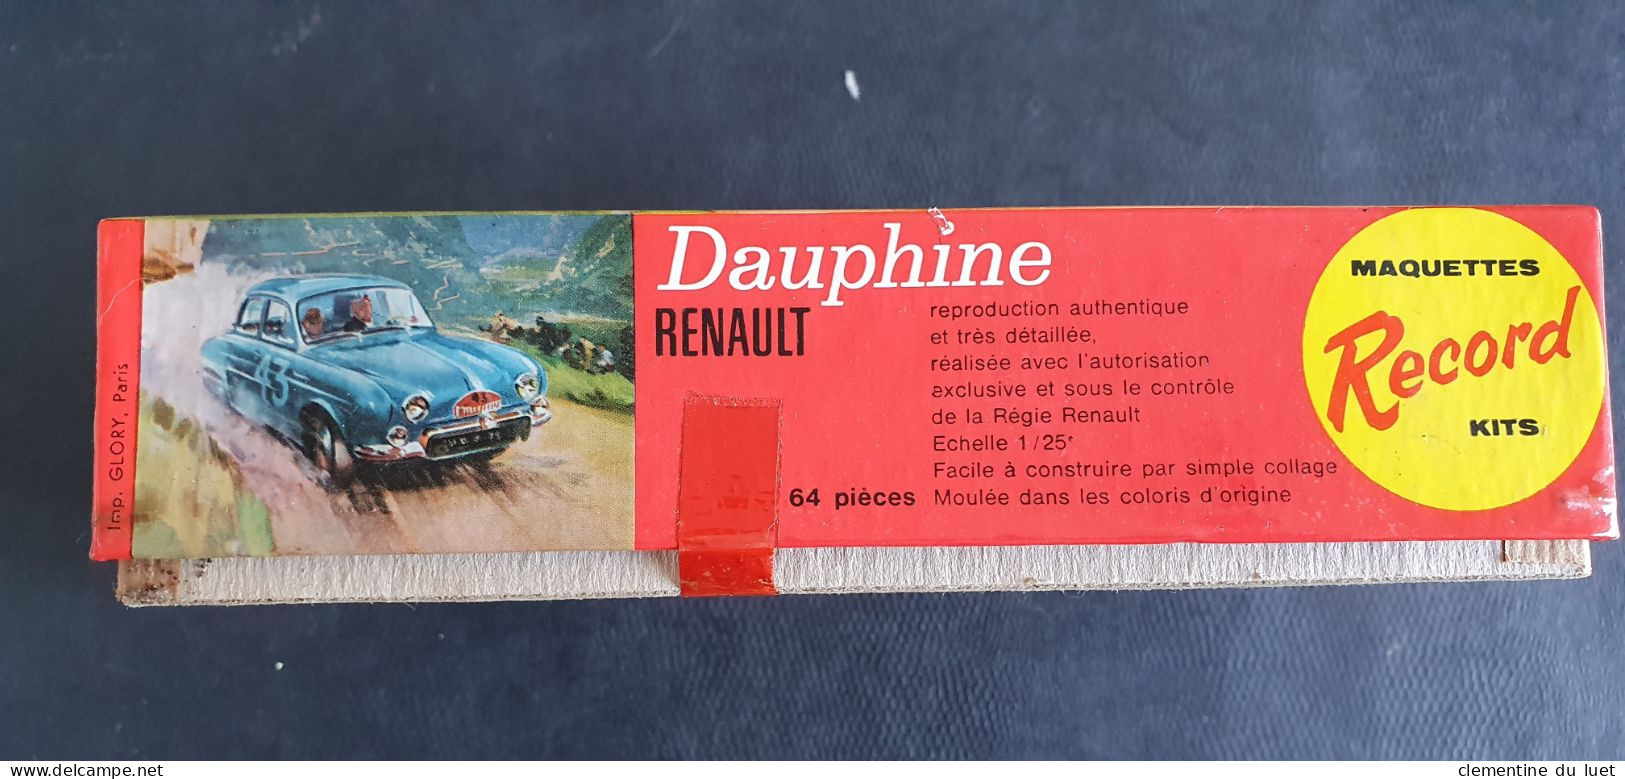 MAQUETTE RENAULT DAUPHINE RECORD KITS 64 PIECES ECHELLE 1 / 25 EME - Cars